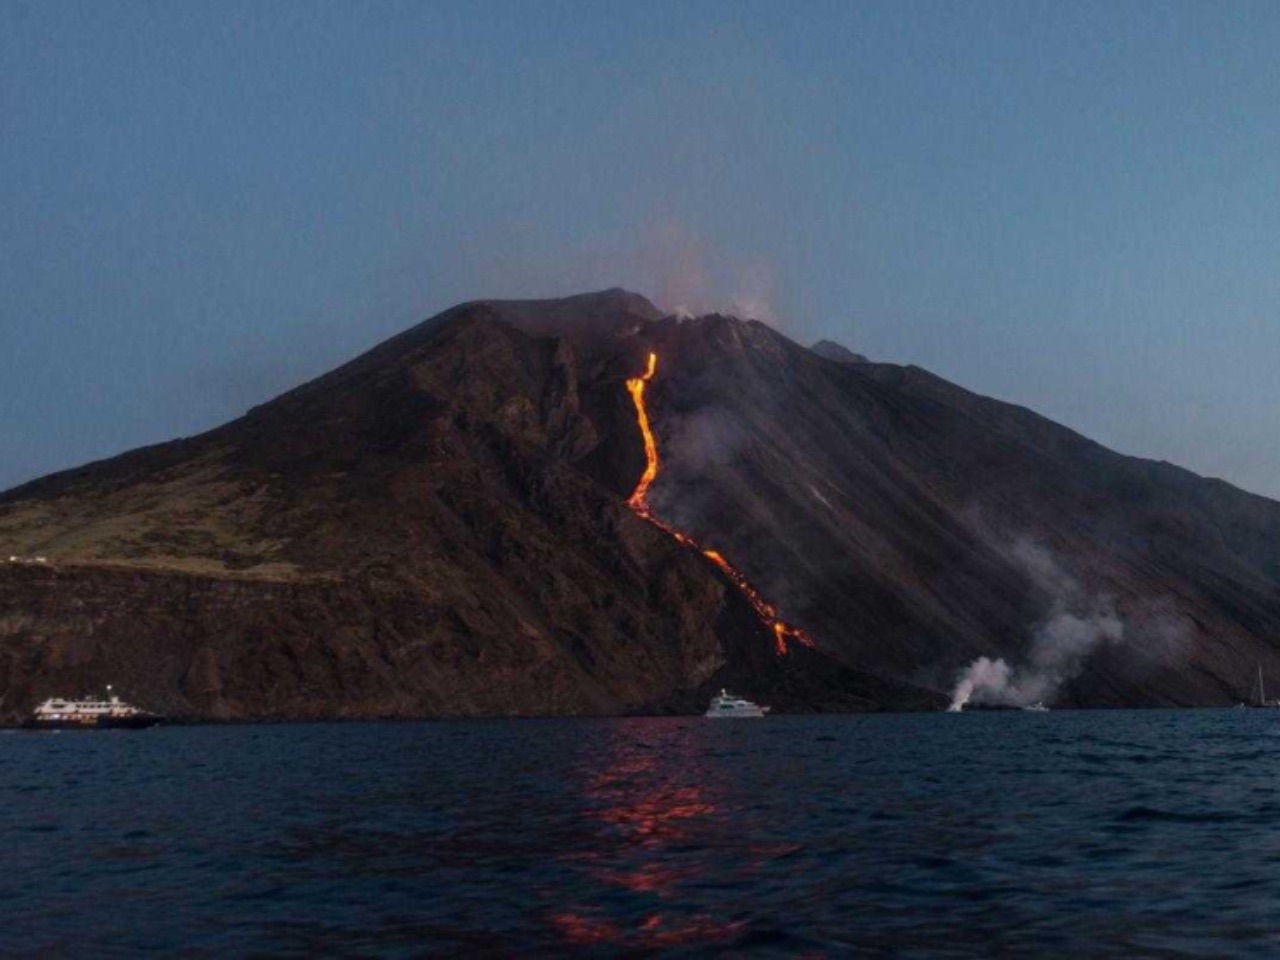 Volcano island. Стромболи вулкан. Италия остров-вулкан Стромболи. Вулкан Стромболи в Италии. Вулкан Стромболи извержение.